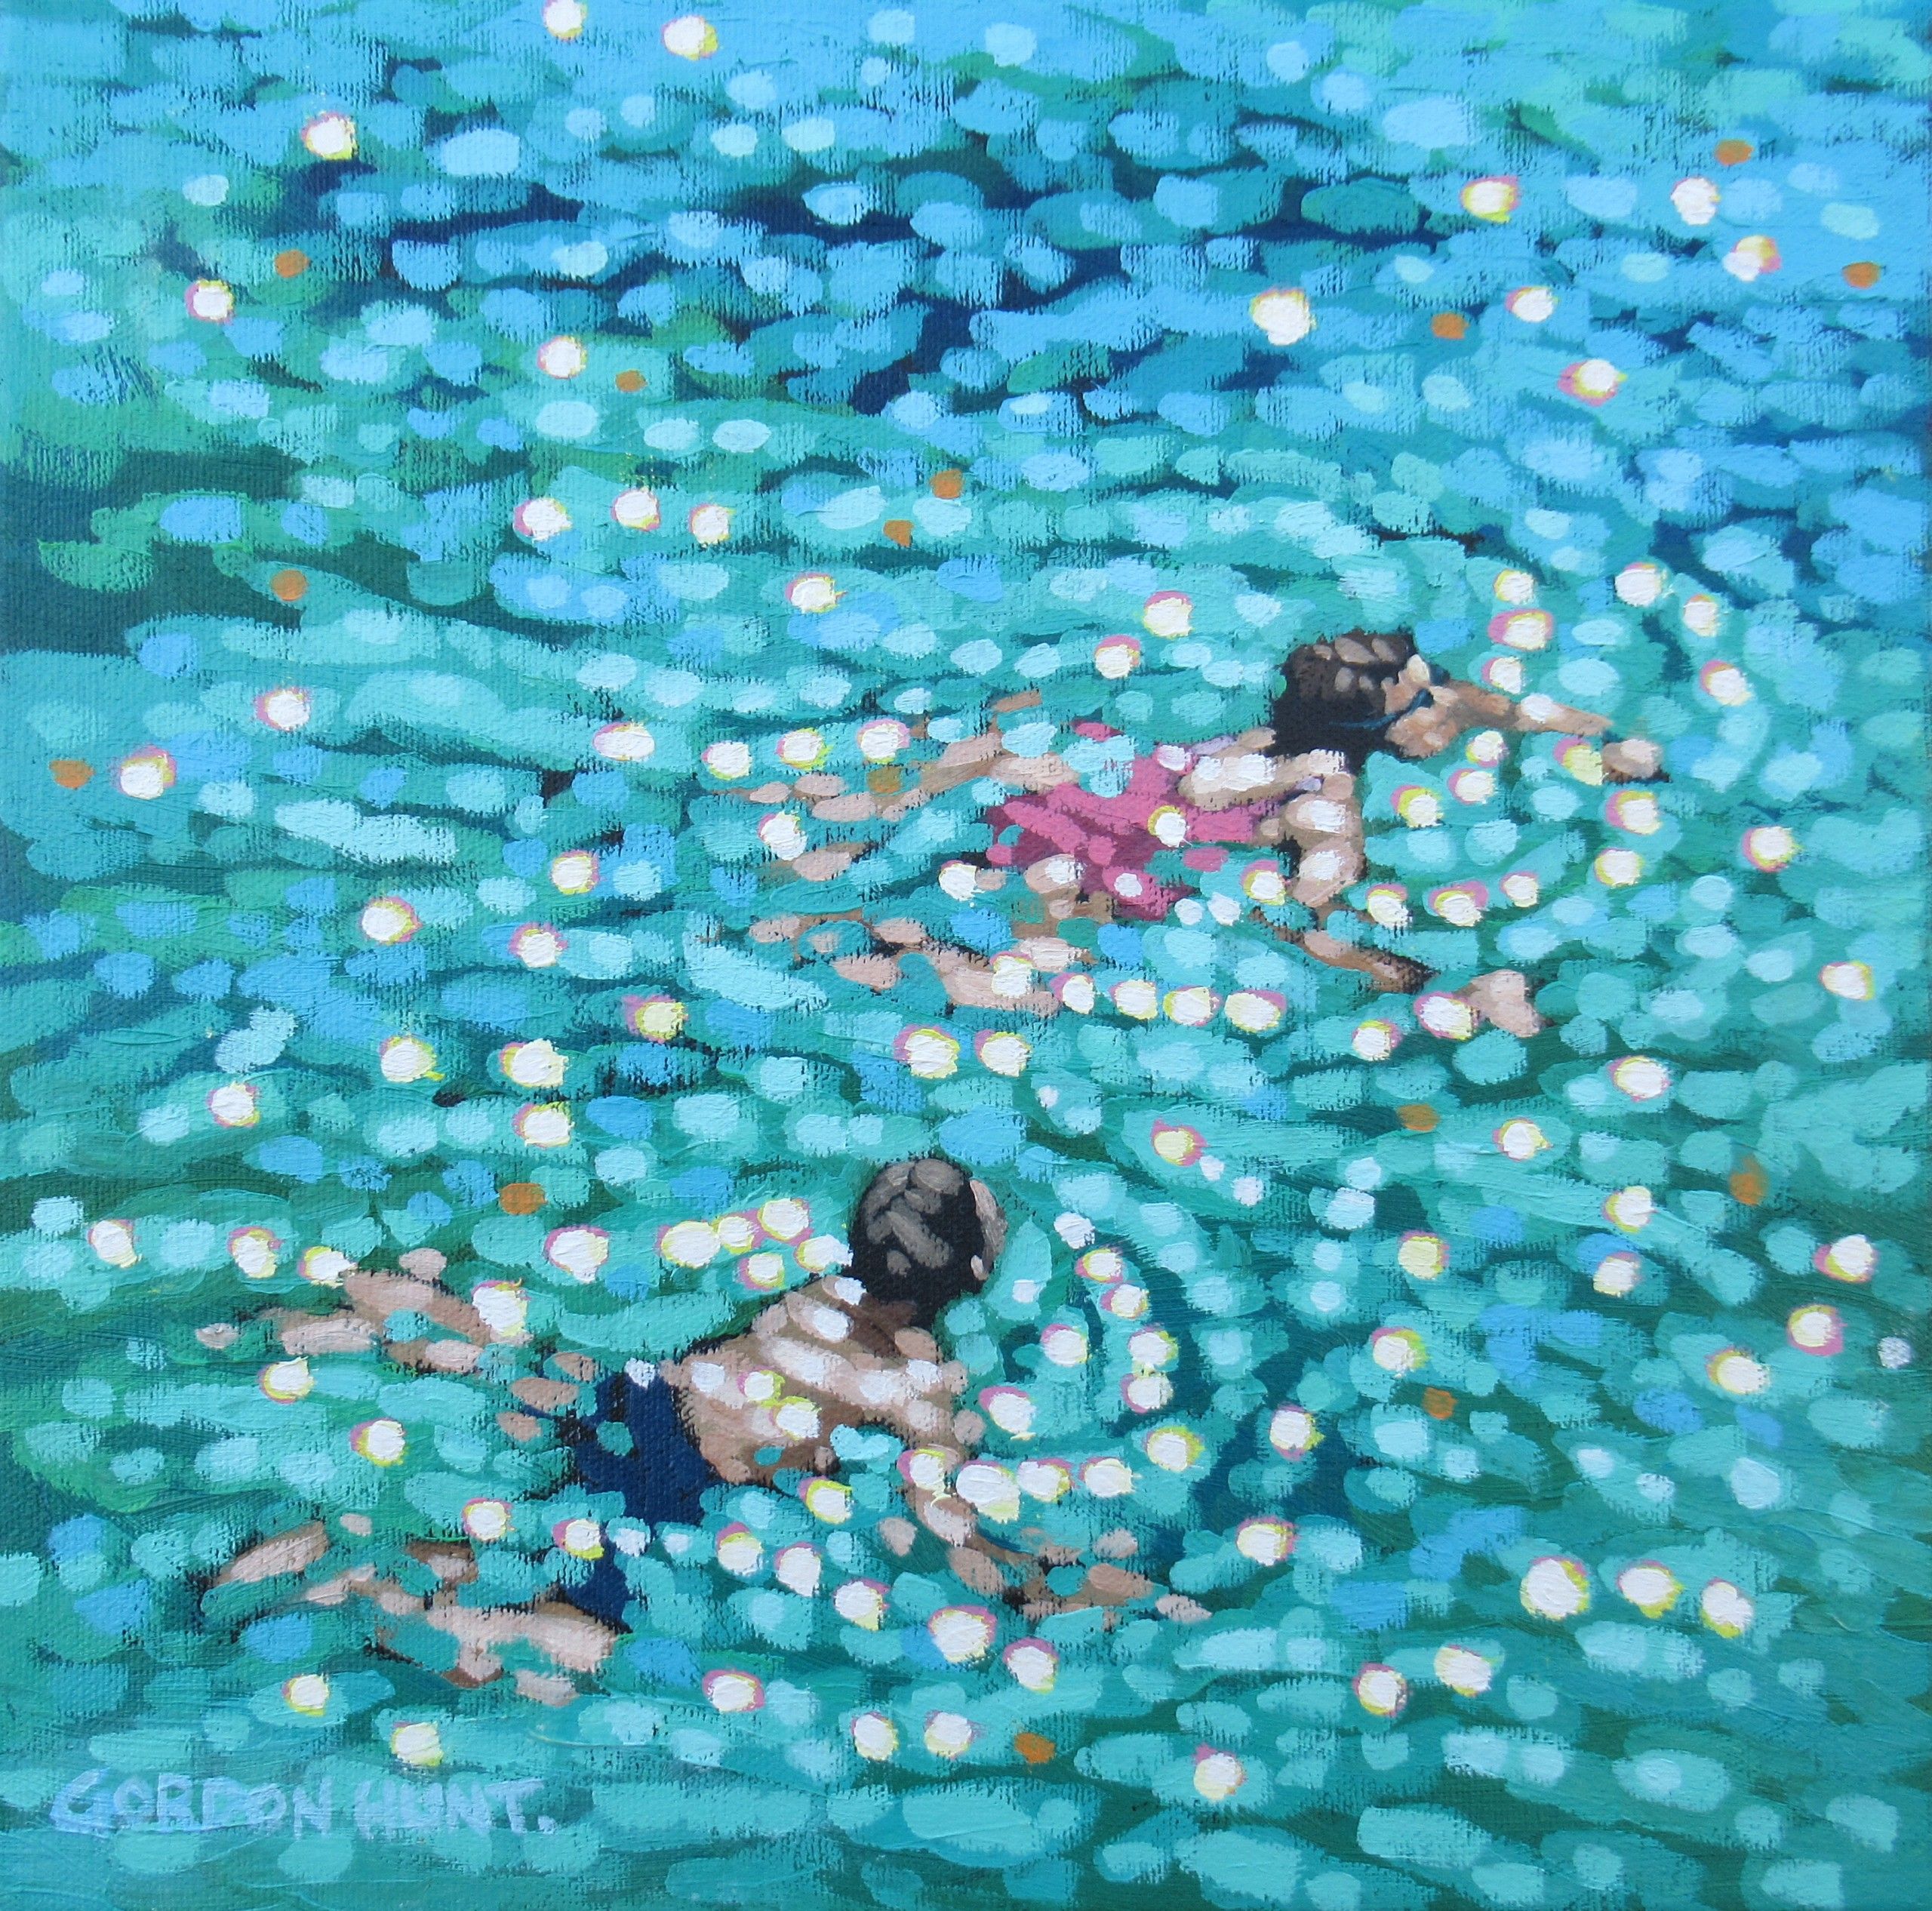 Just Swim by Gordon Hunt